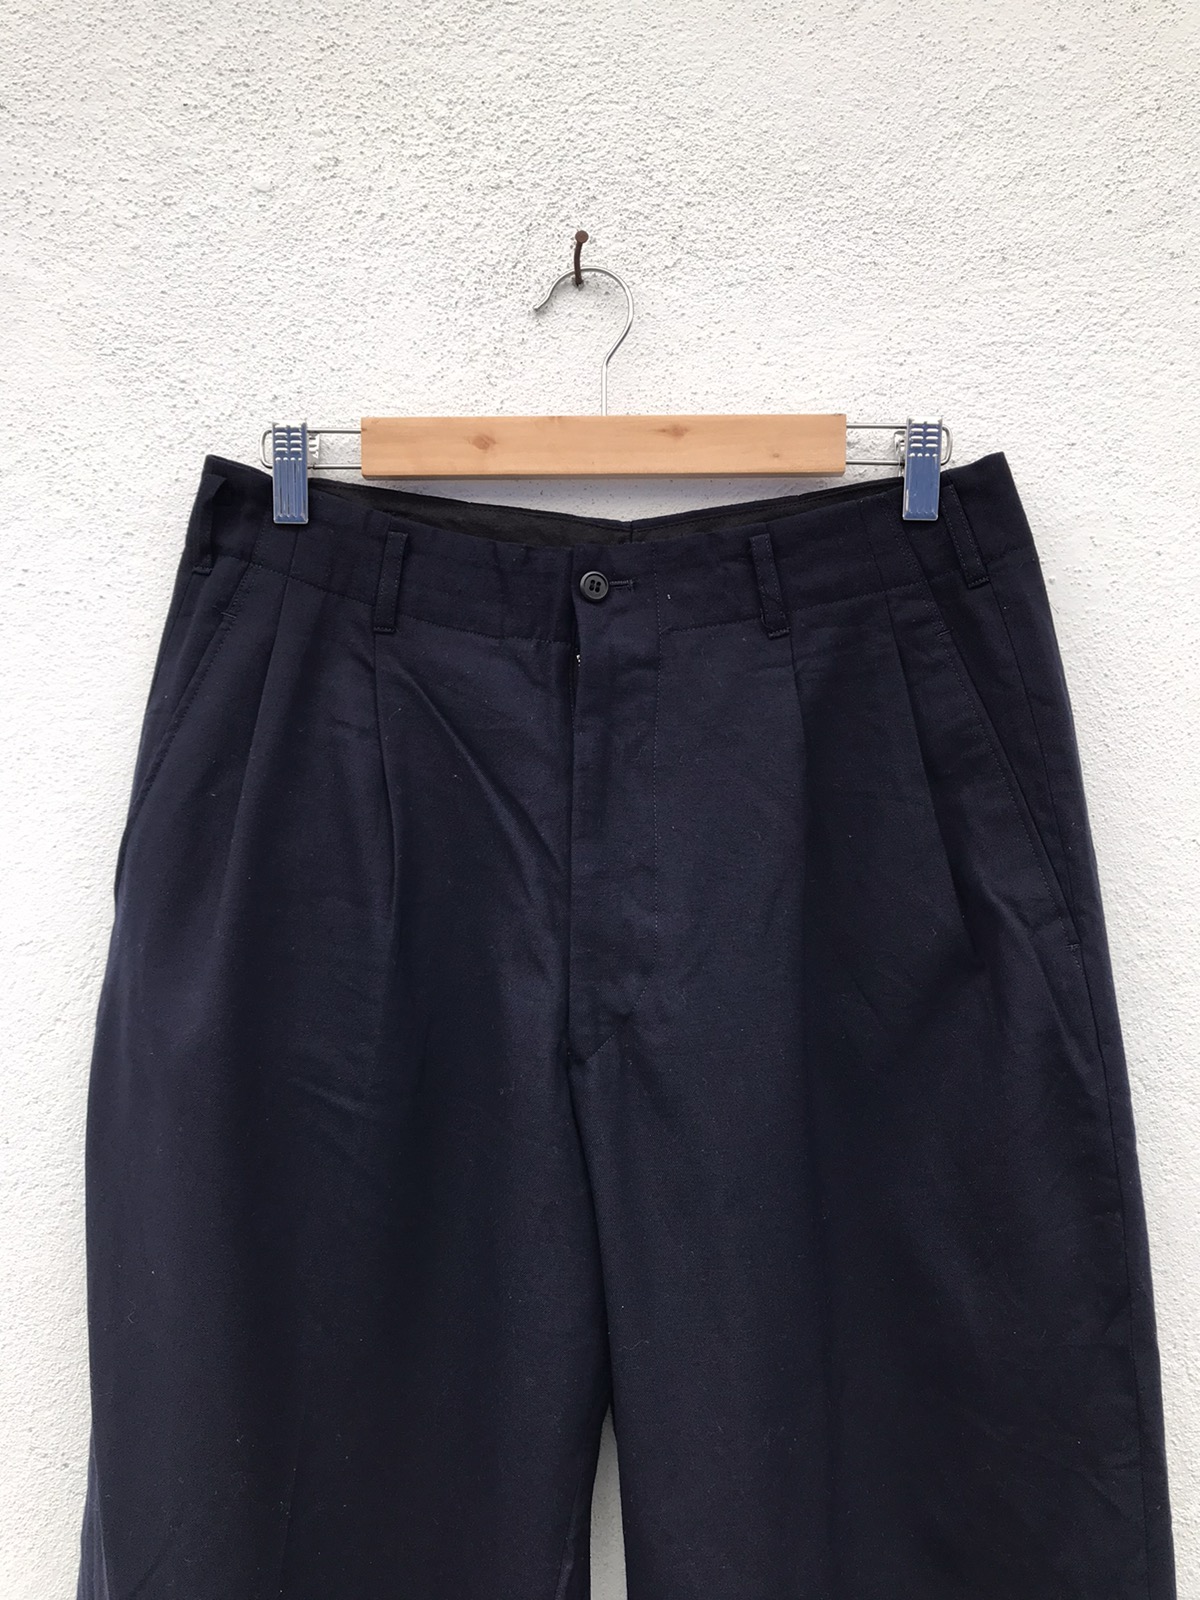 Yohji Yamamoto Central Japan Railway Company Wool Pants - 2